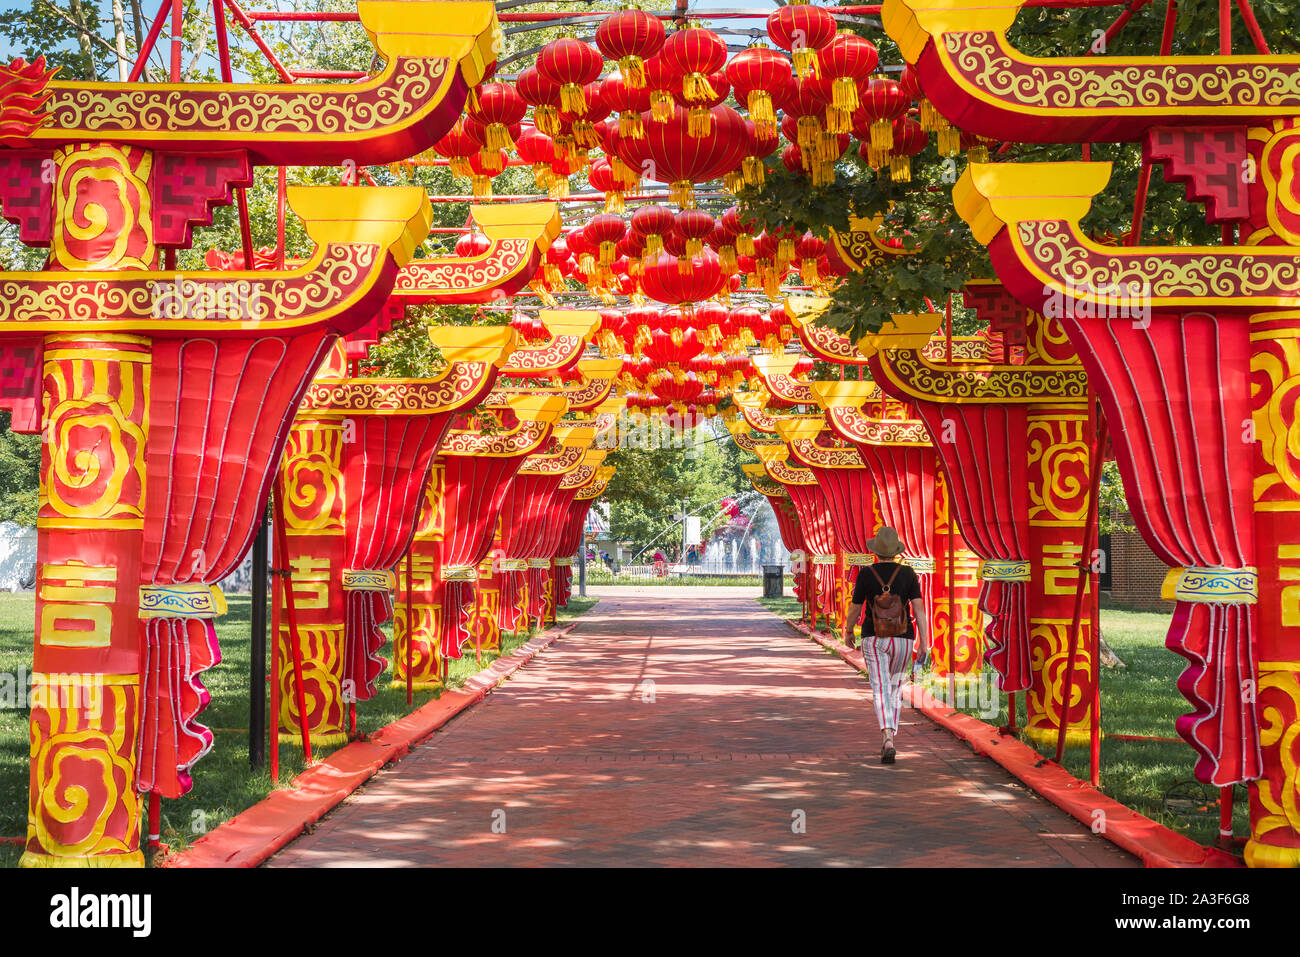 Franklin Square Park, view of colorful Chinese arches inside Franklin Square Park during the Chinese Lantern Festival, Philadelphia, USA Stock Photo